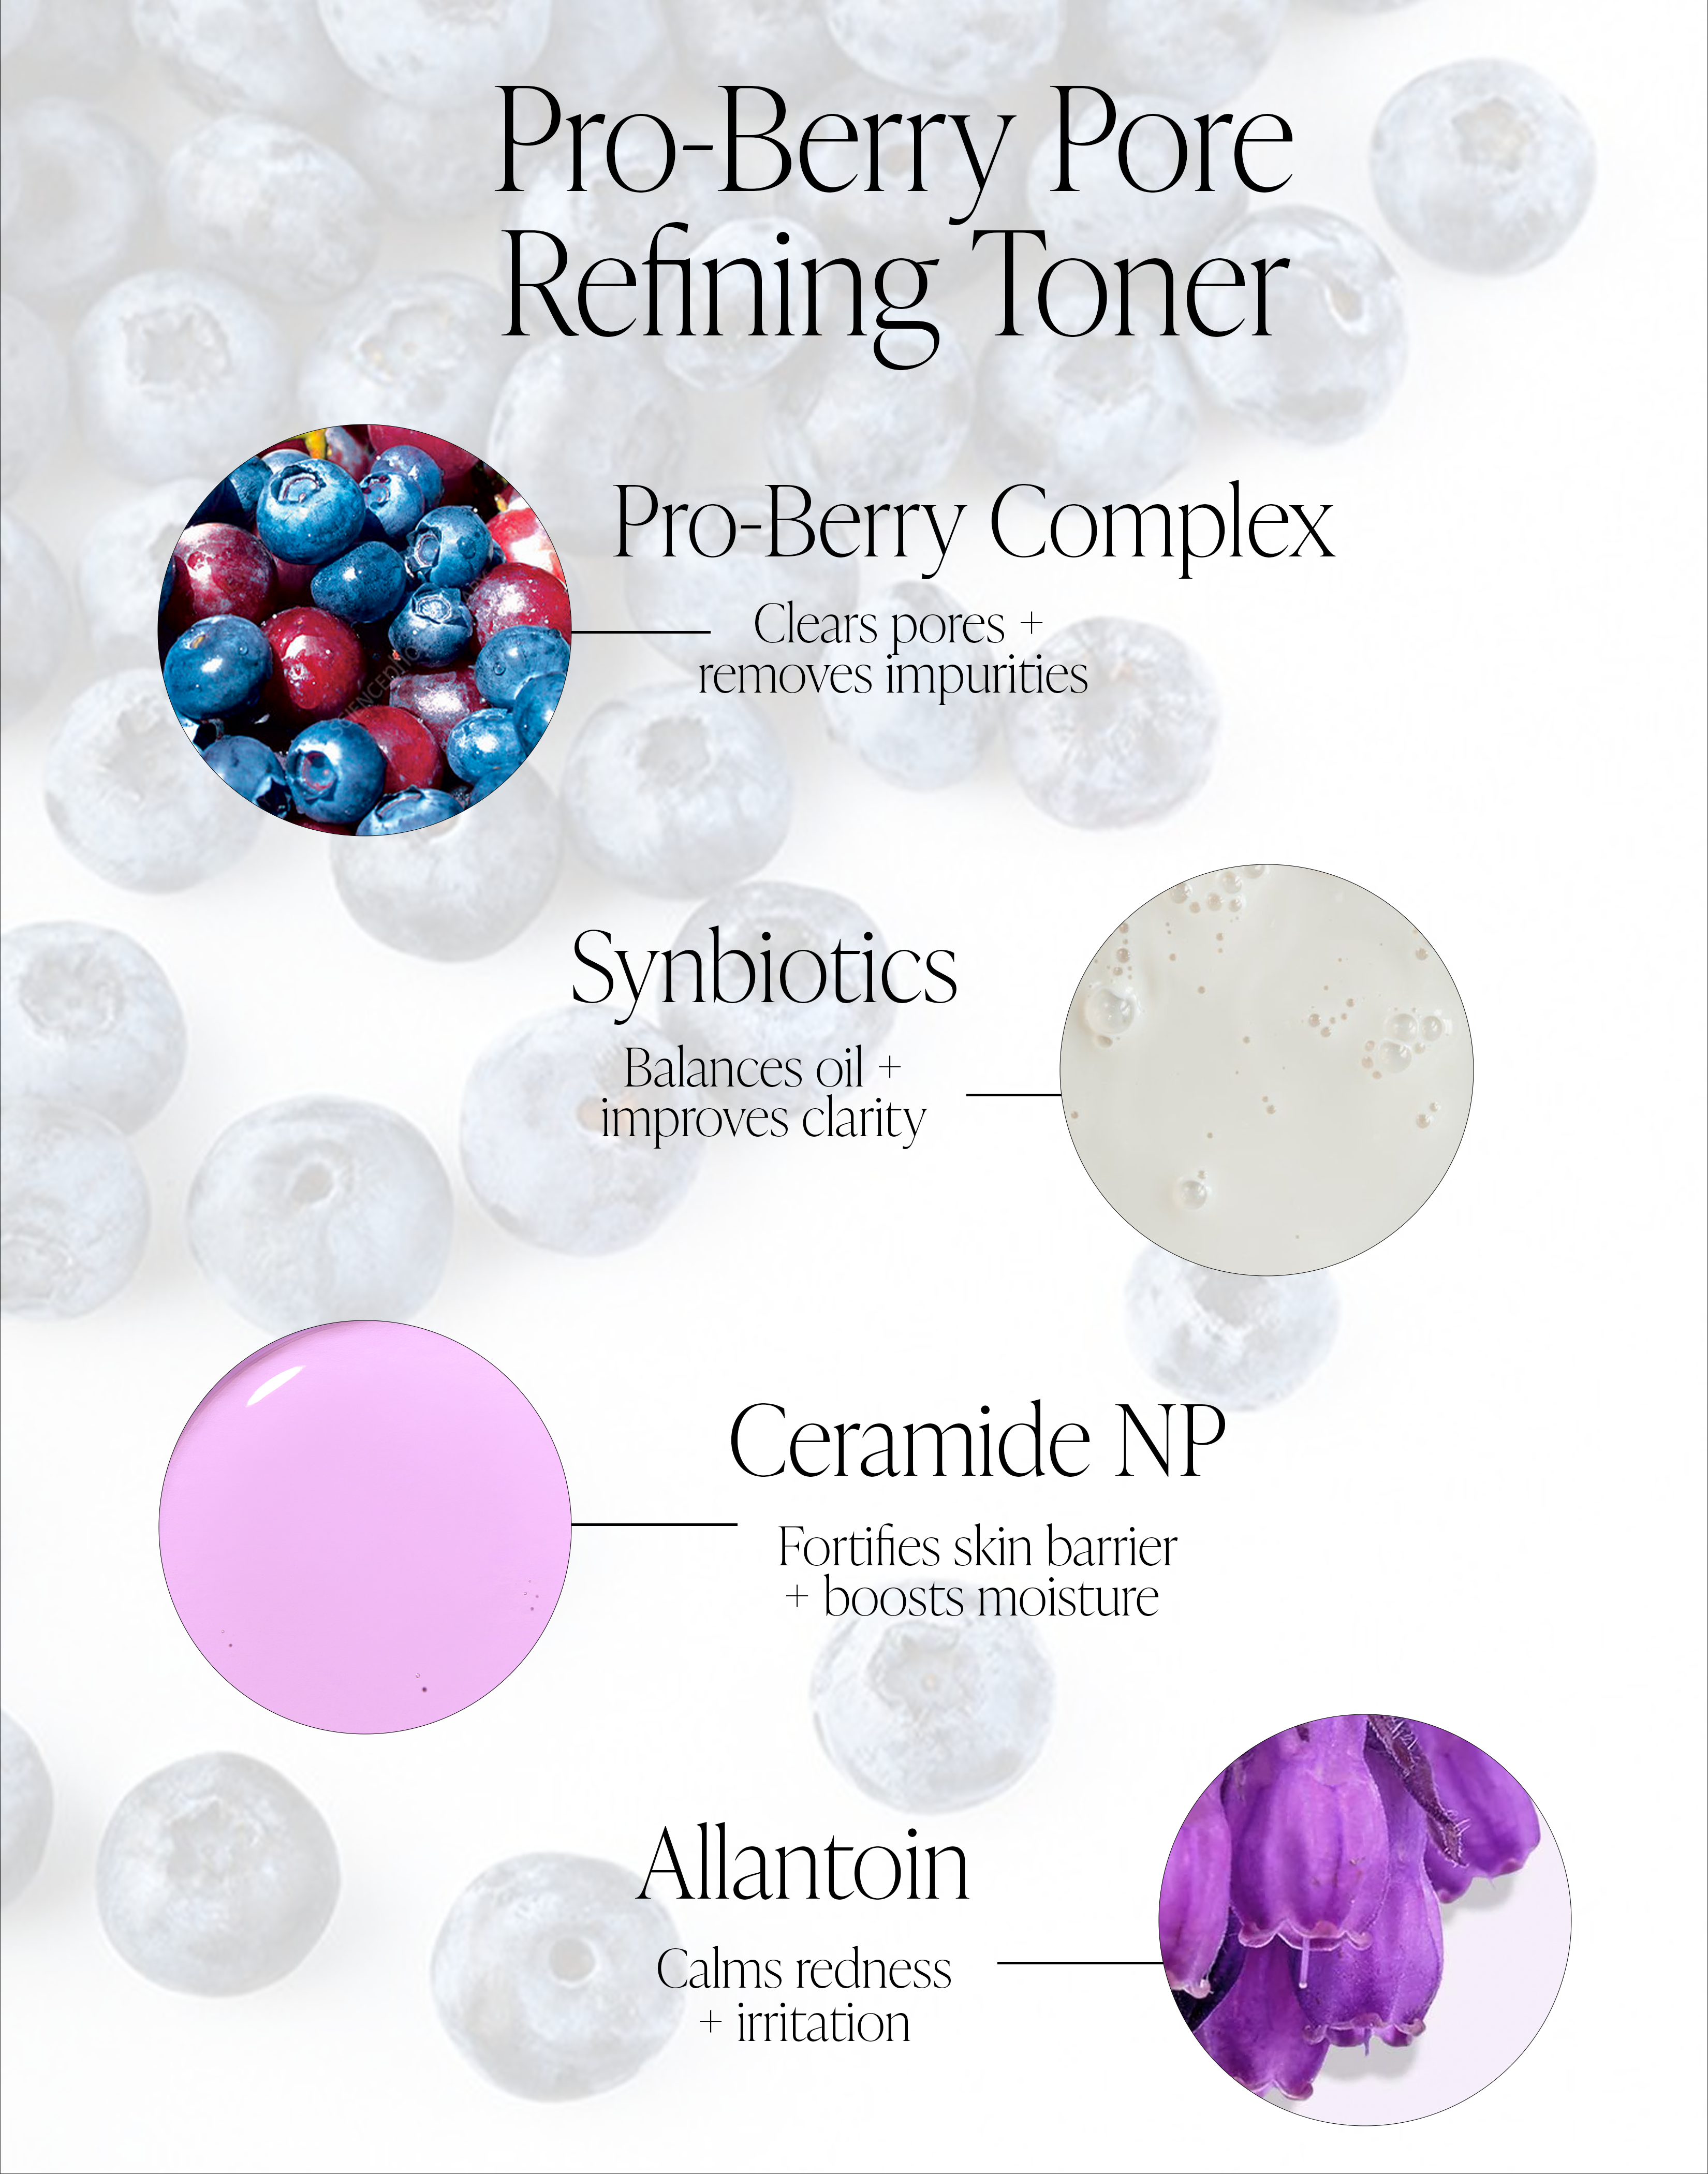 Pro-Berry Pore Refining Toner